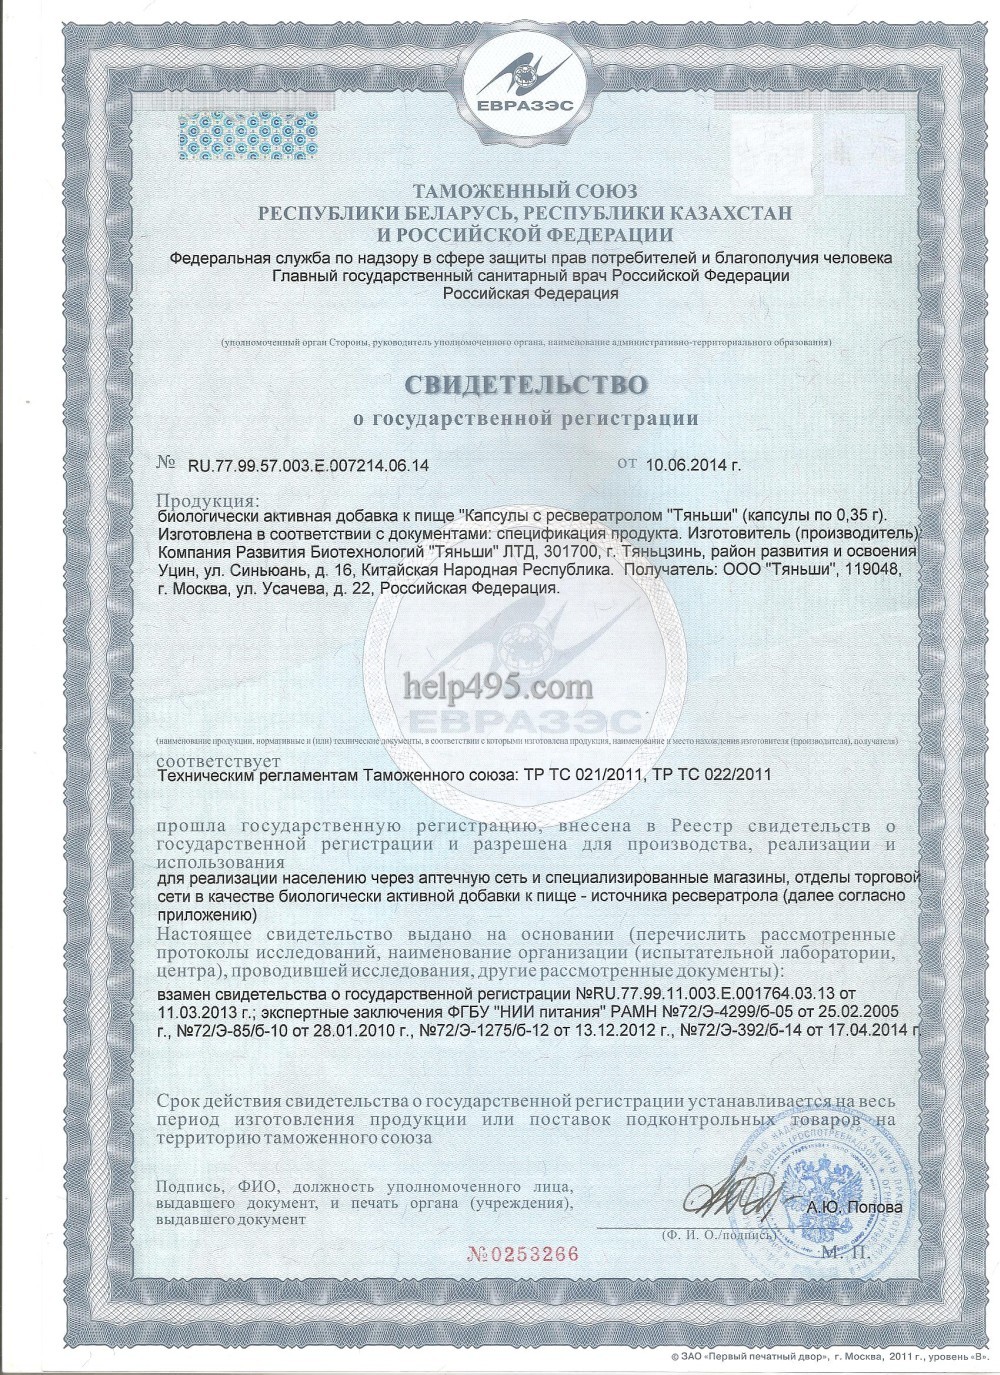 1-ая стр. сертификата препарата: Капсулы с расверотролом Тяньши